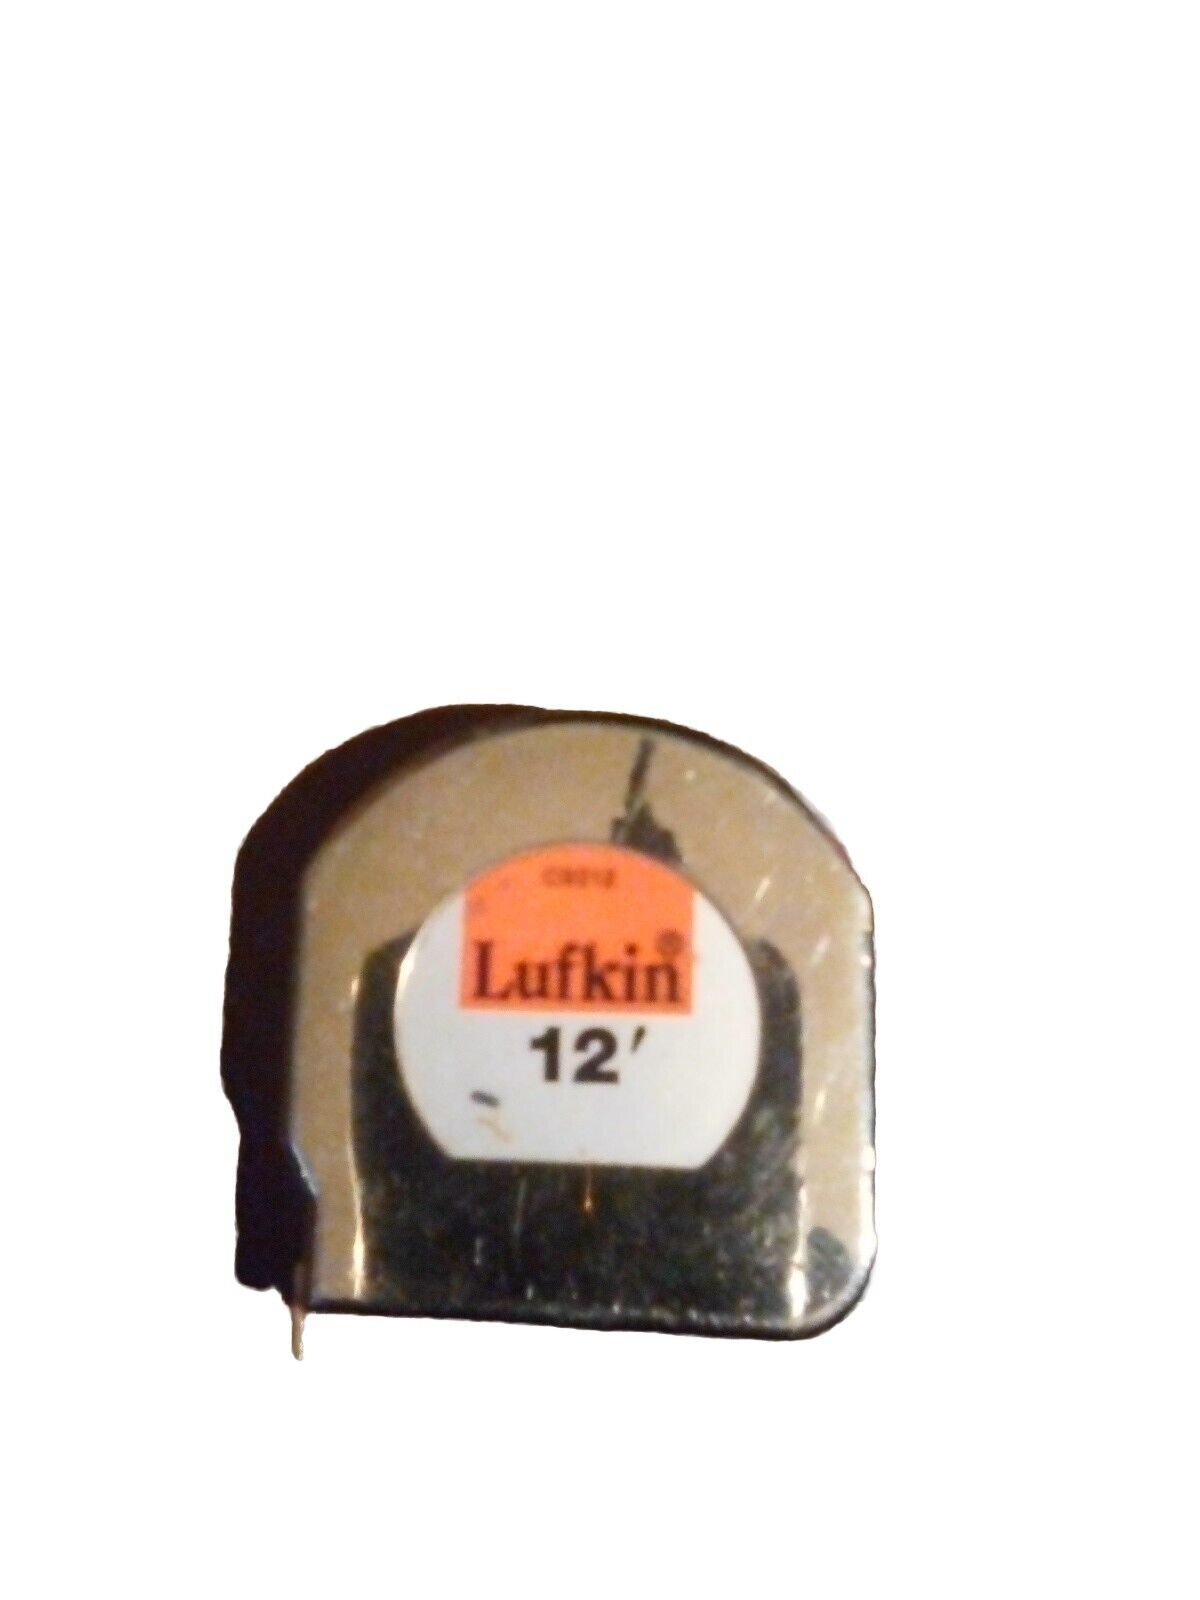 Vintage Original Lufkin 12 ft 12\' W9212 Tape Measure w/ Clip, CLEAN Nice